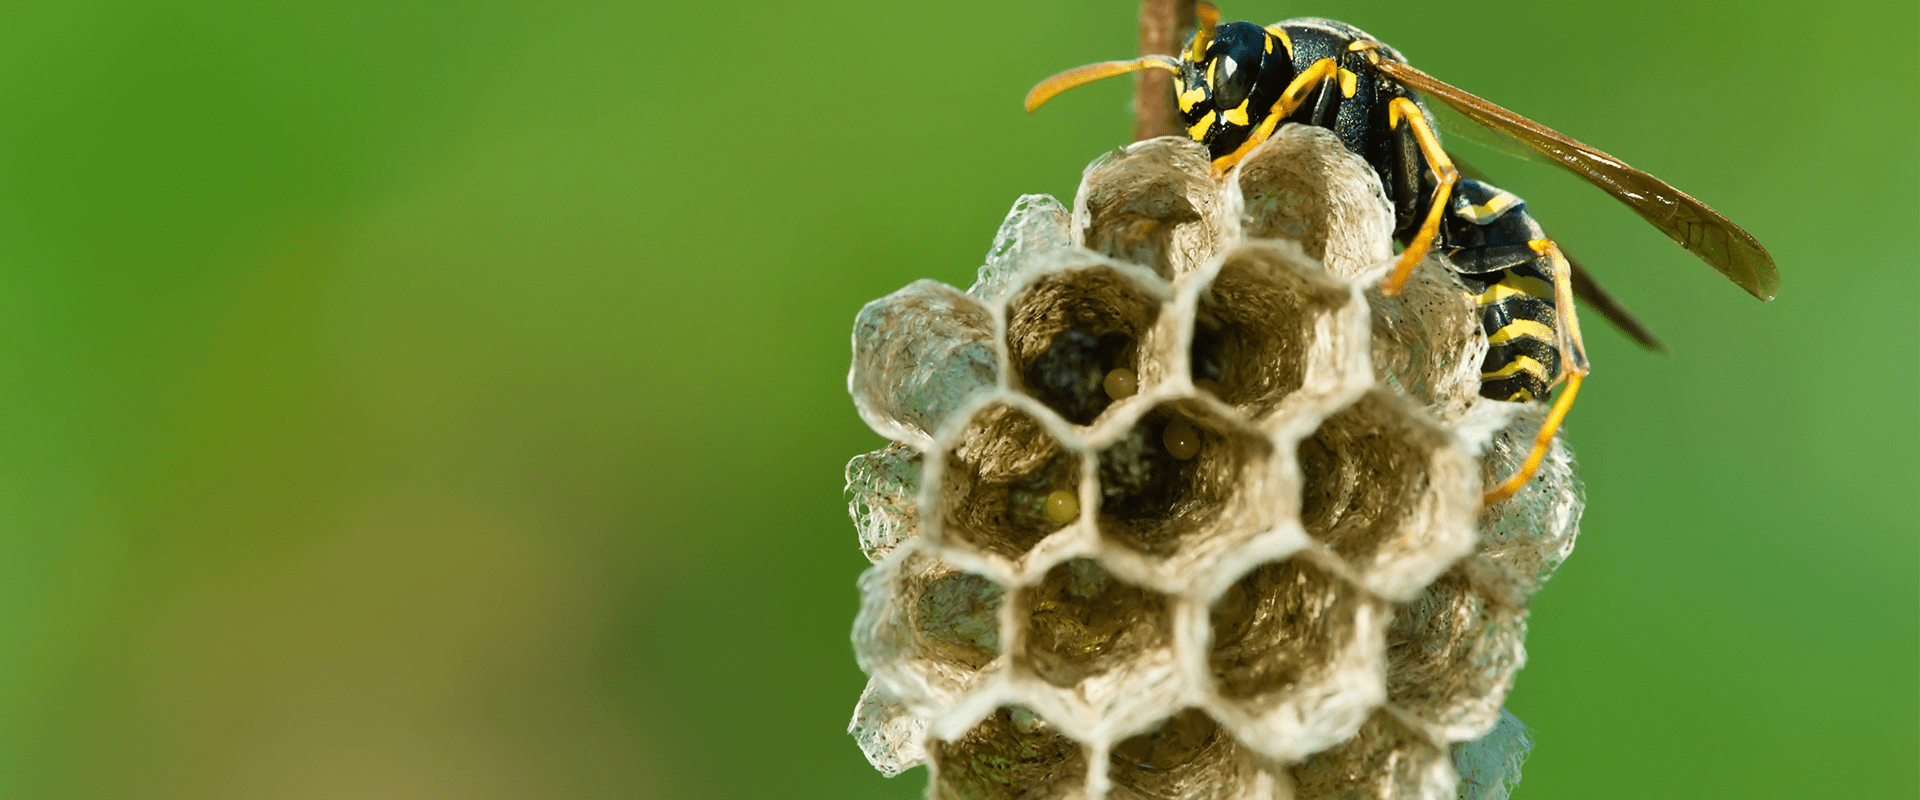 large wasp found in washington dc